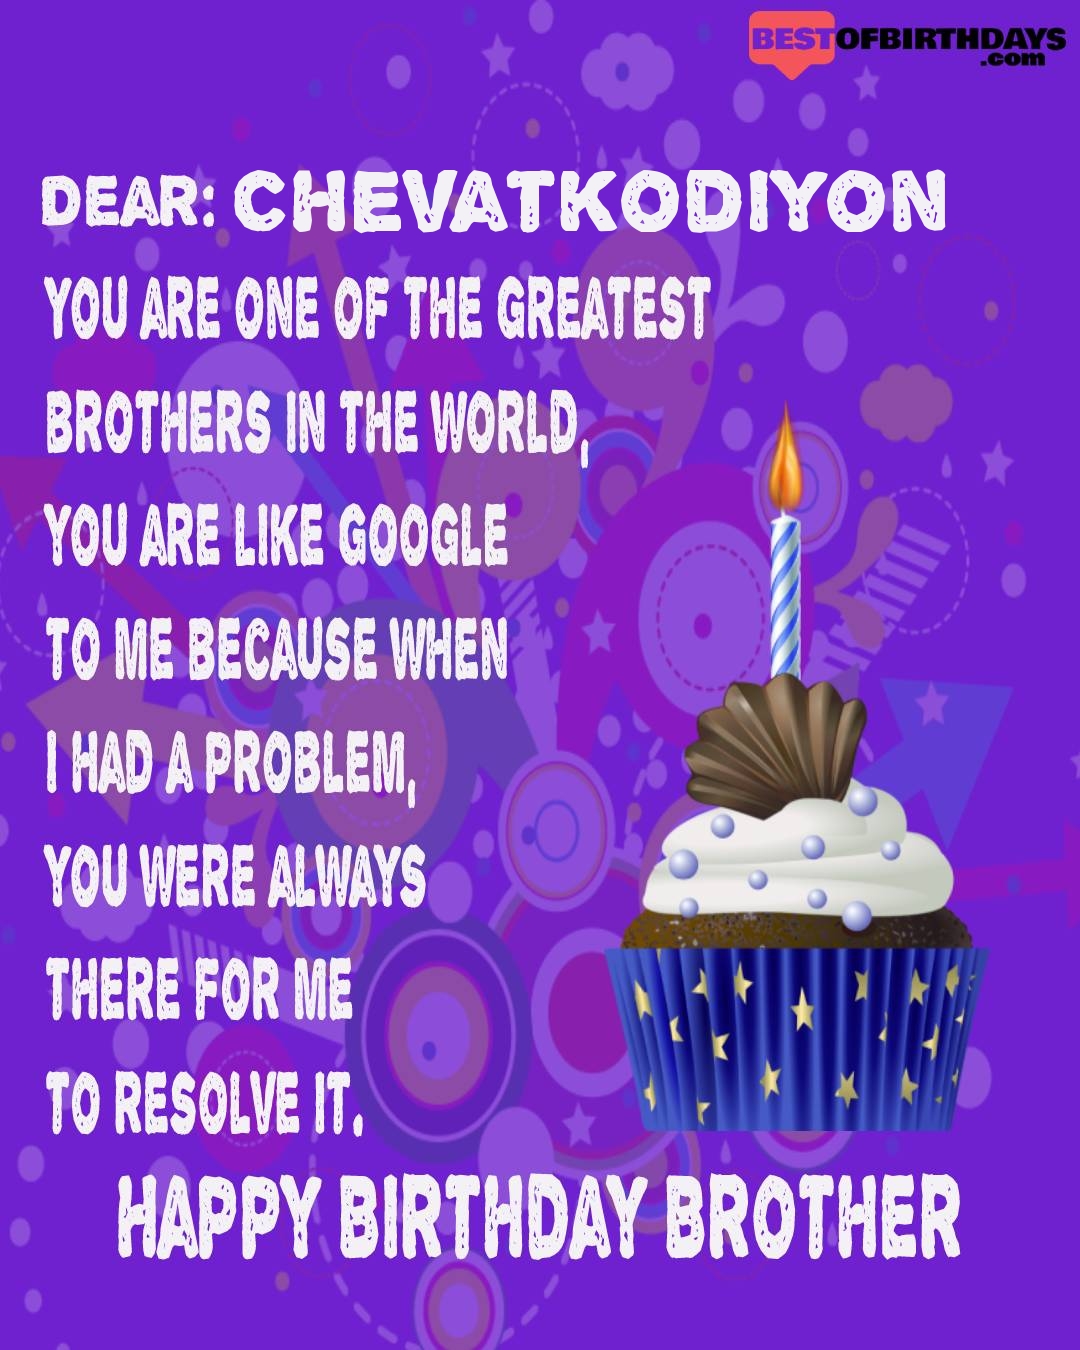 Happy birthday chevatkodiyon bhai brother bro